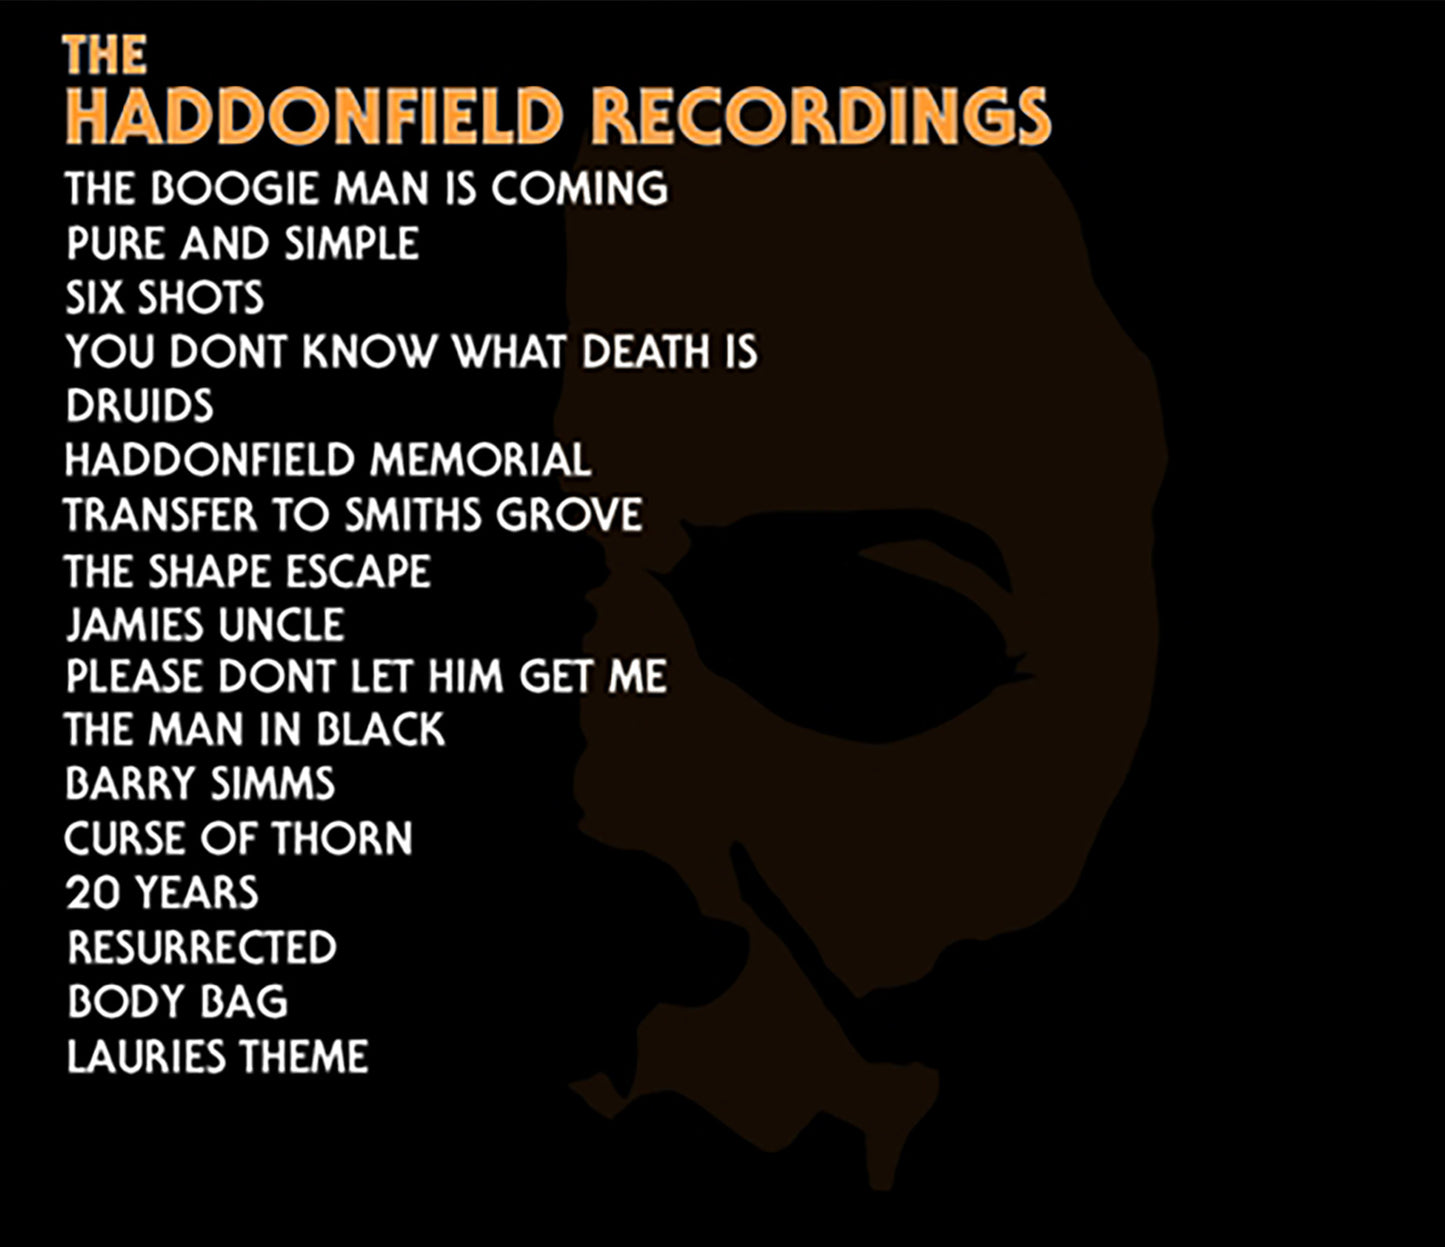 The Haddonfield Recordings CD